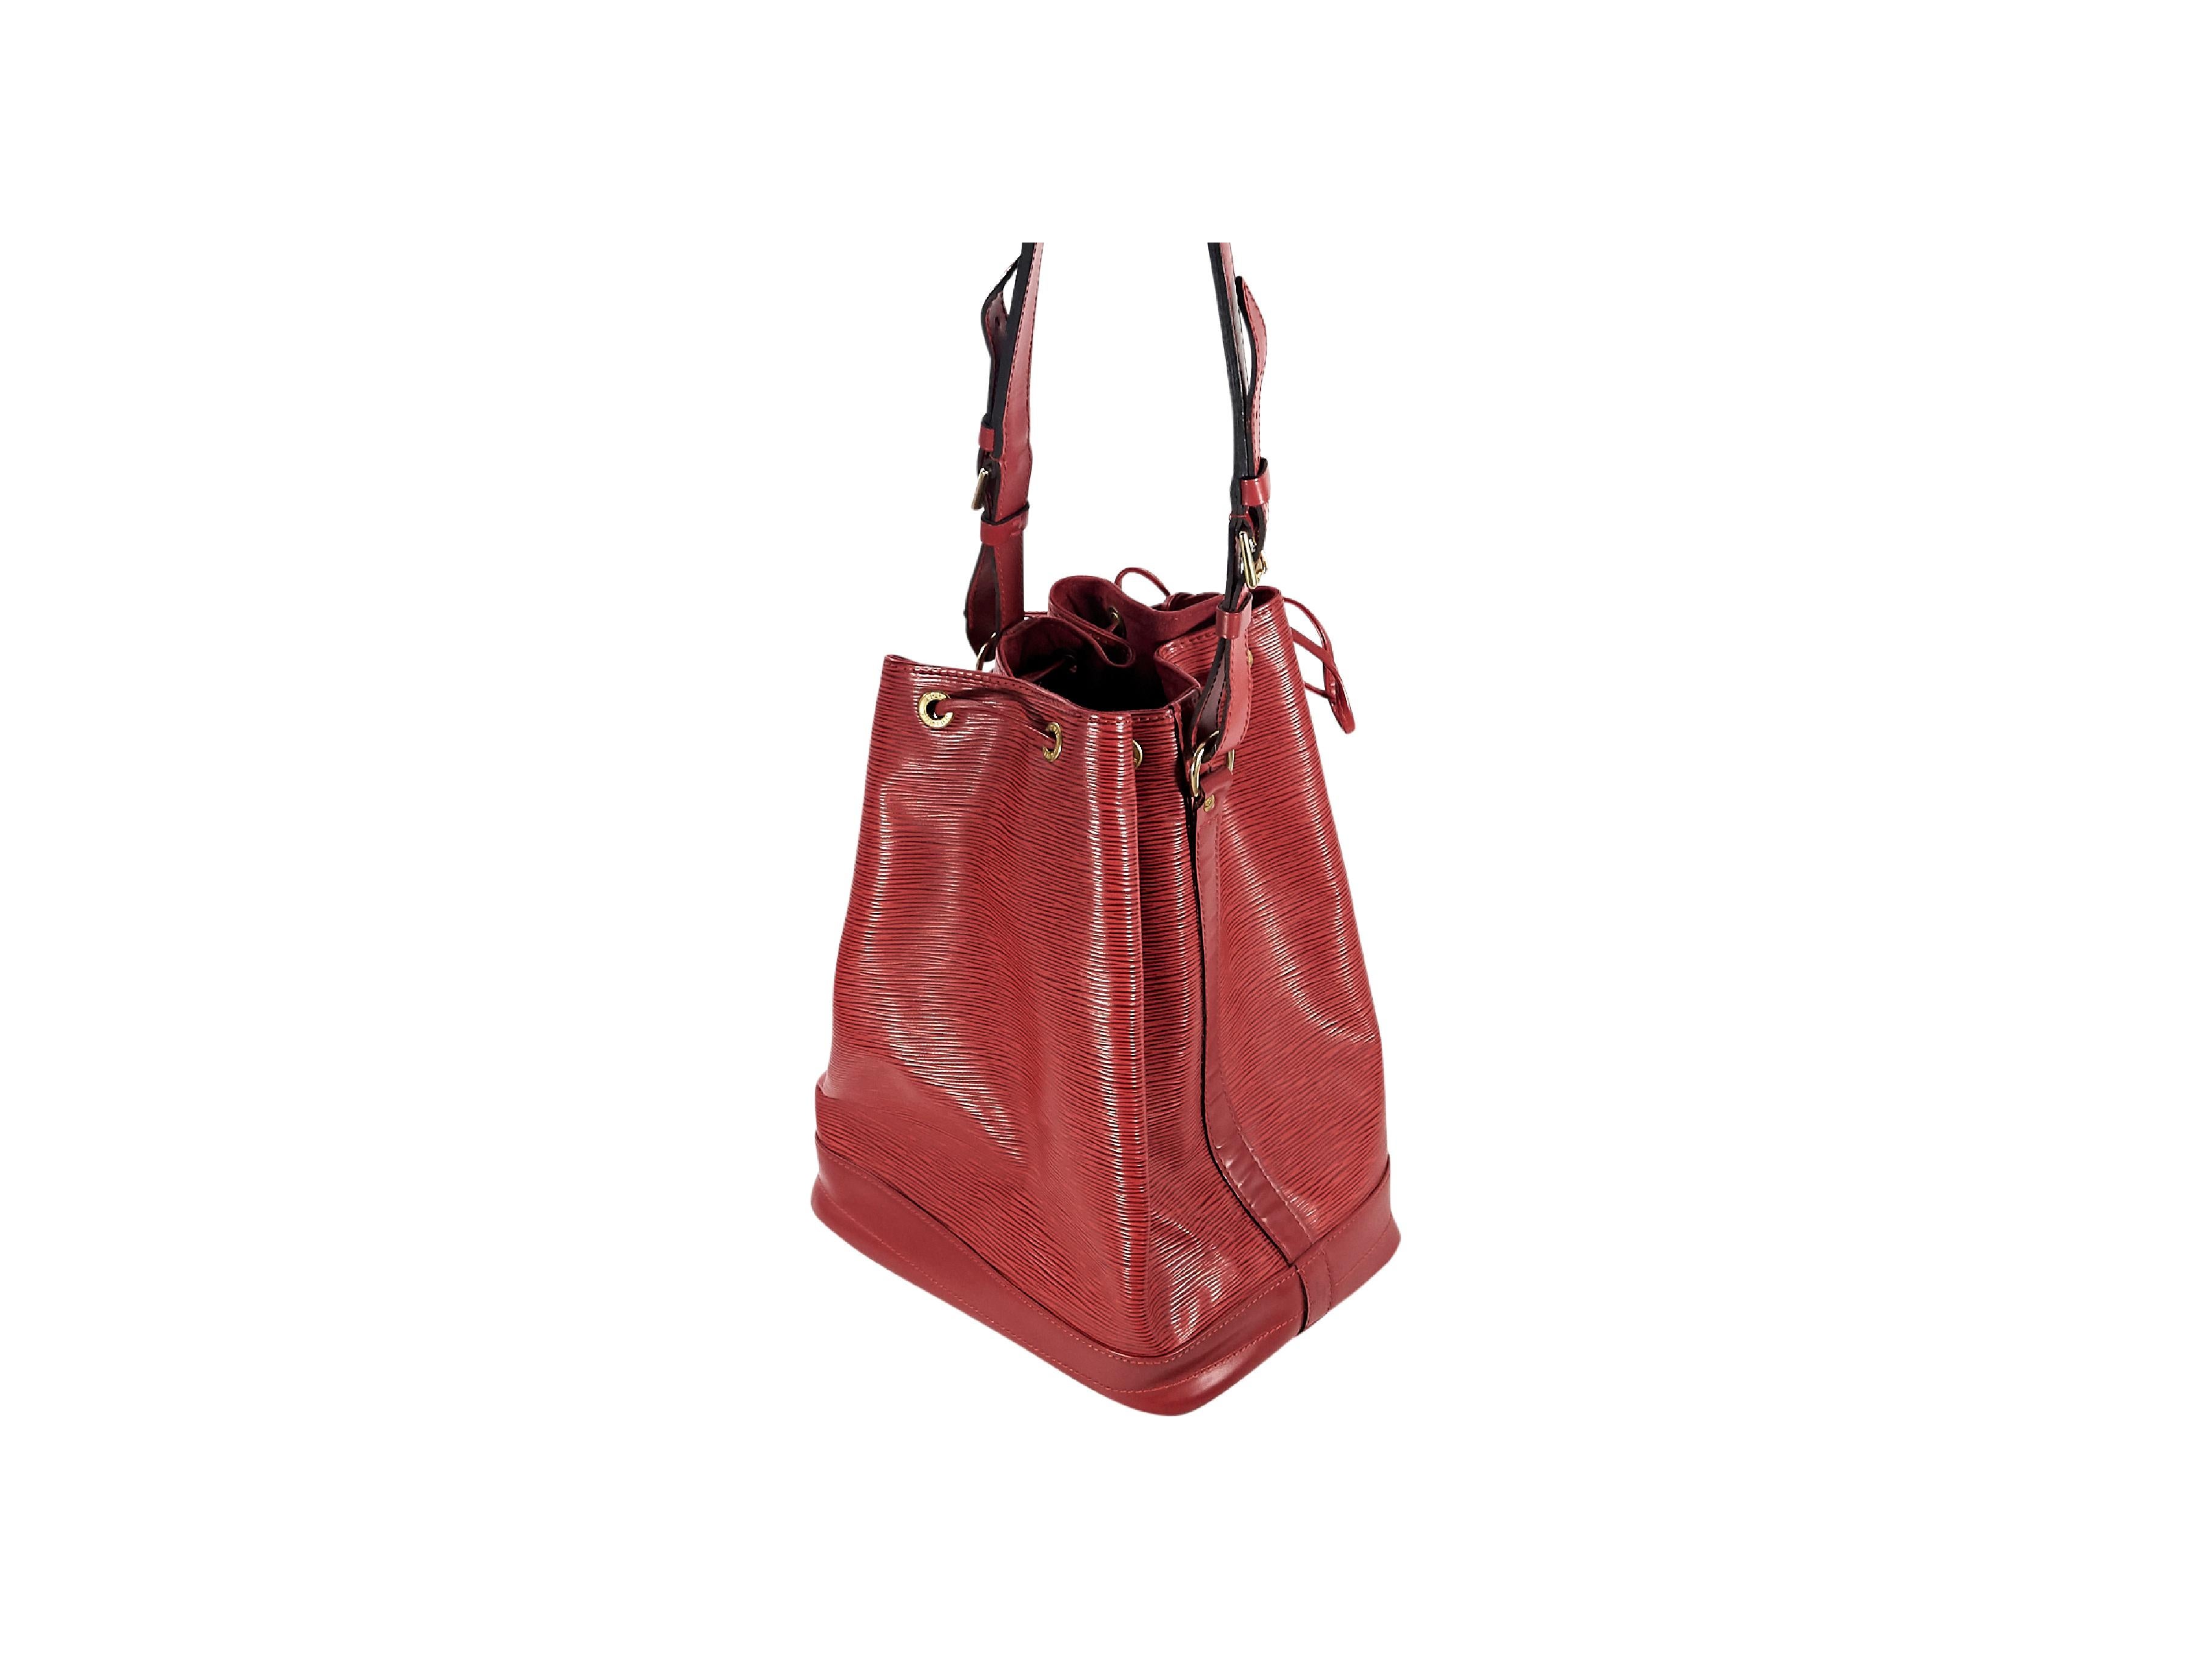 Product details:  Red epi leather Noe GM bucke tbag by Louis Vuitton.  Adjustable shoulder strap.  Drawstring top closure.  Lined interior.  Goldtone hardware.  14.5